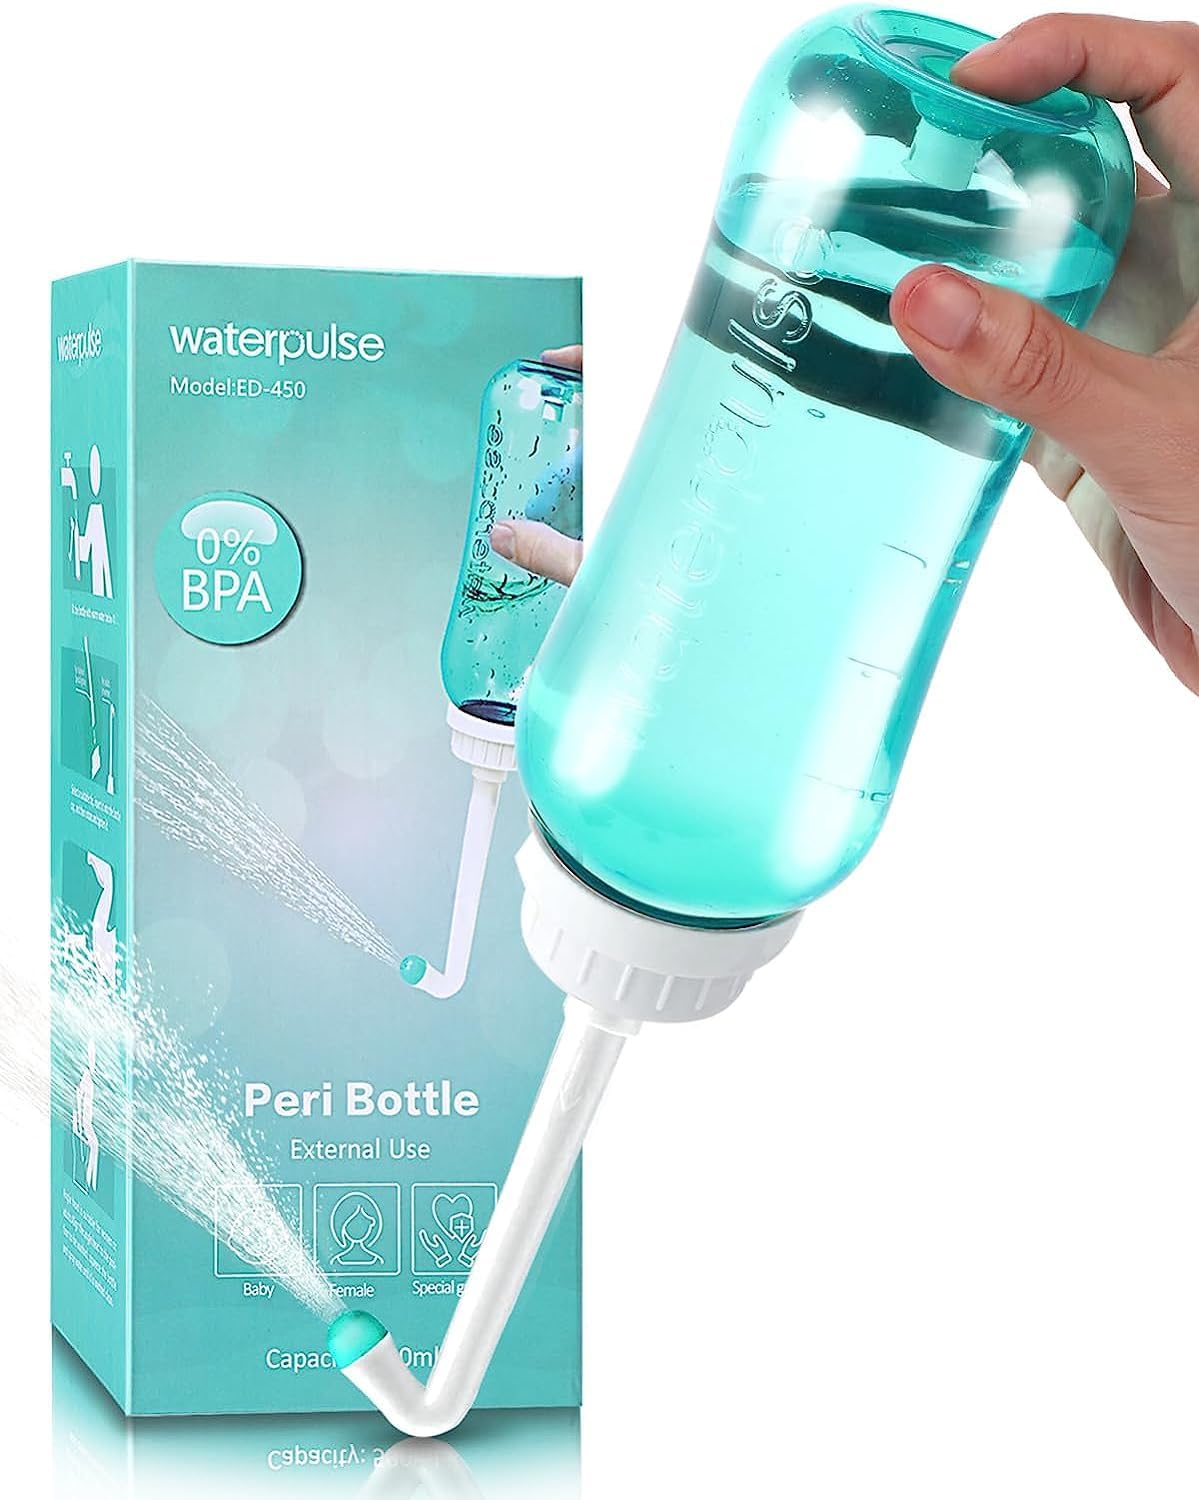 Butt Buddy Go - Portable Handheld Bidet & Fresh Water Bottle